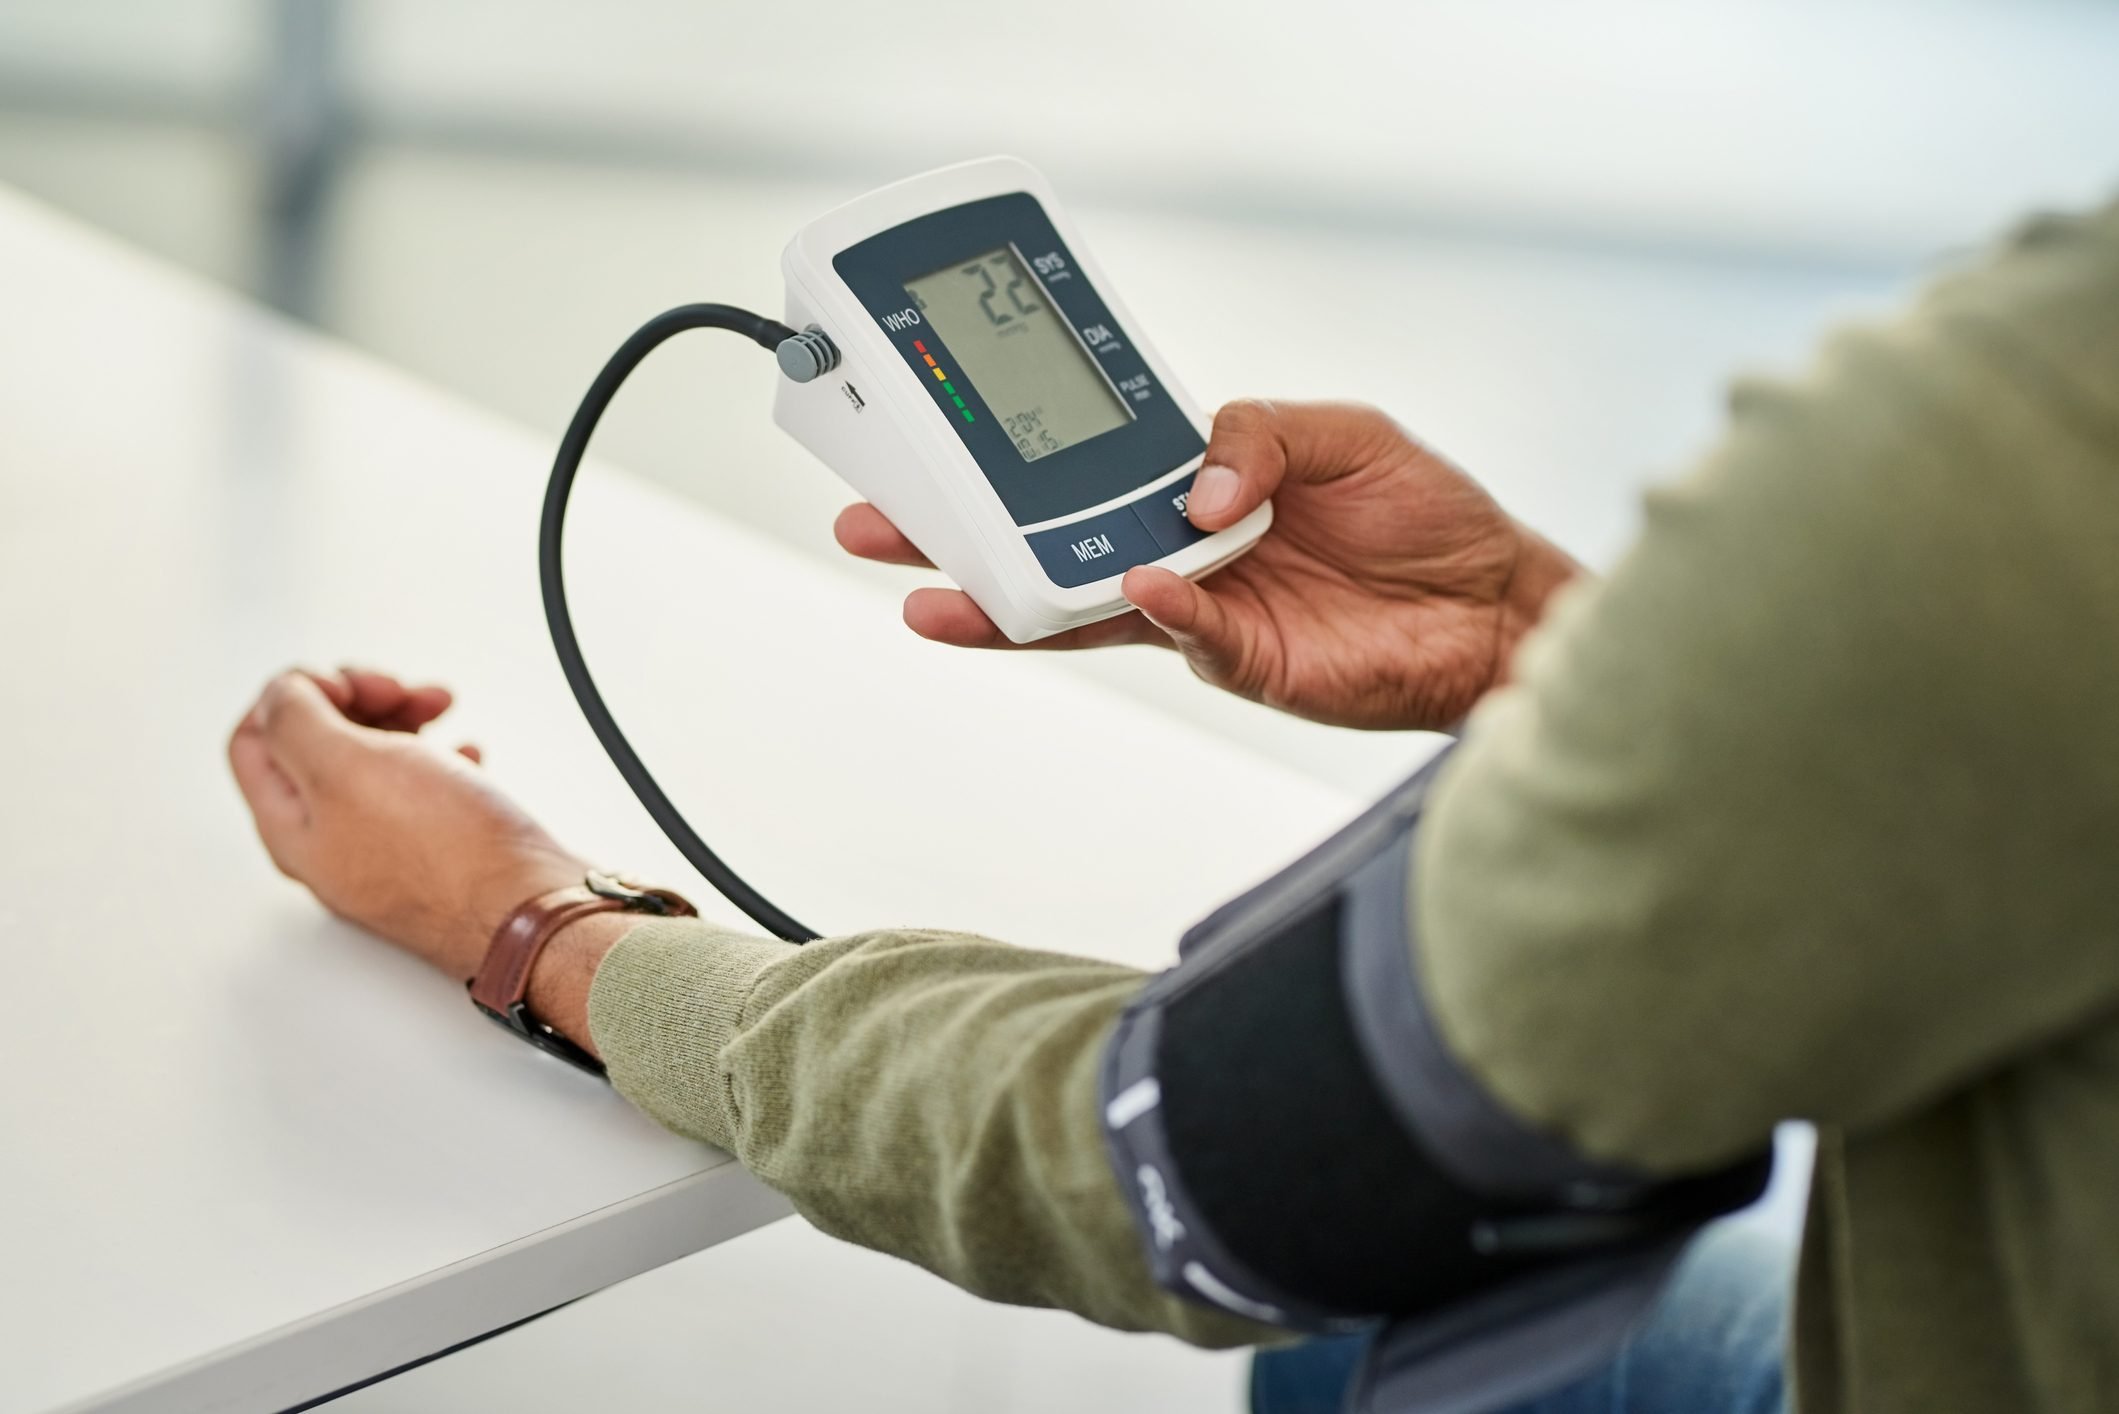 LifeHood Wrist Bluetooth Blood Pressure Monitor 